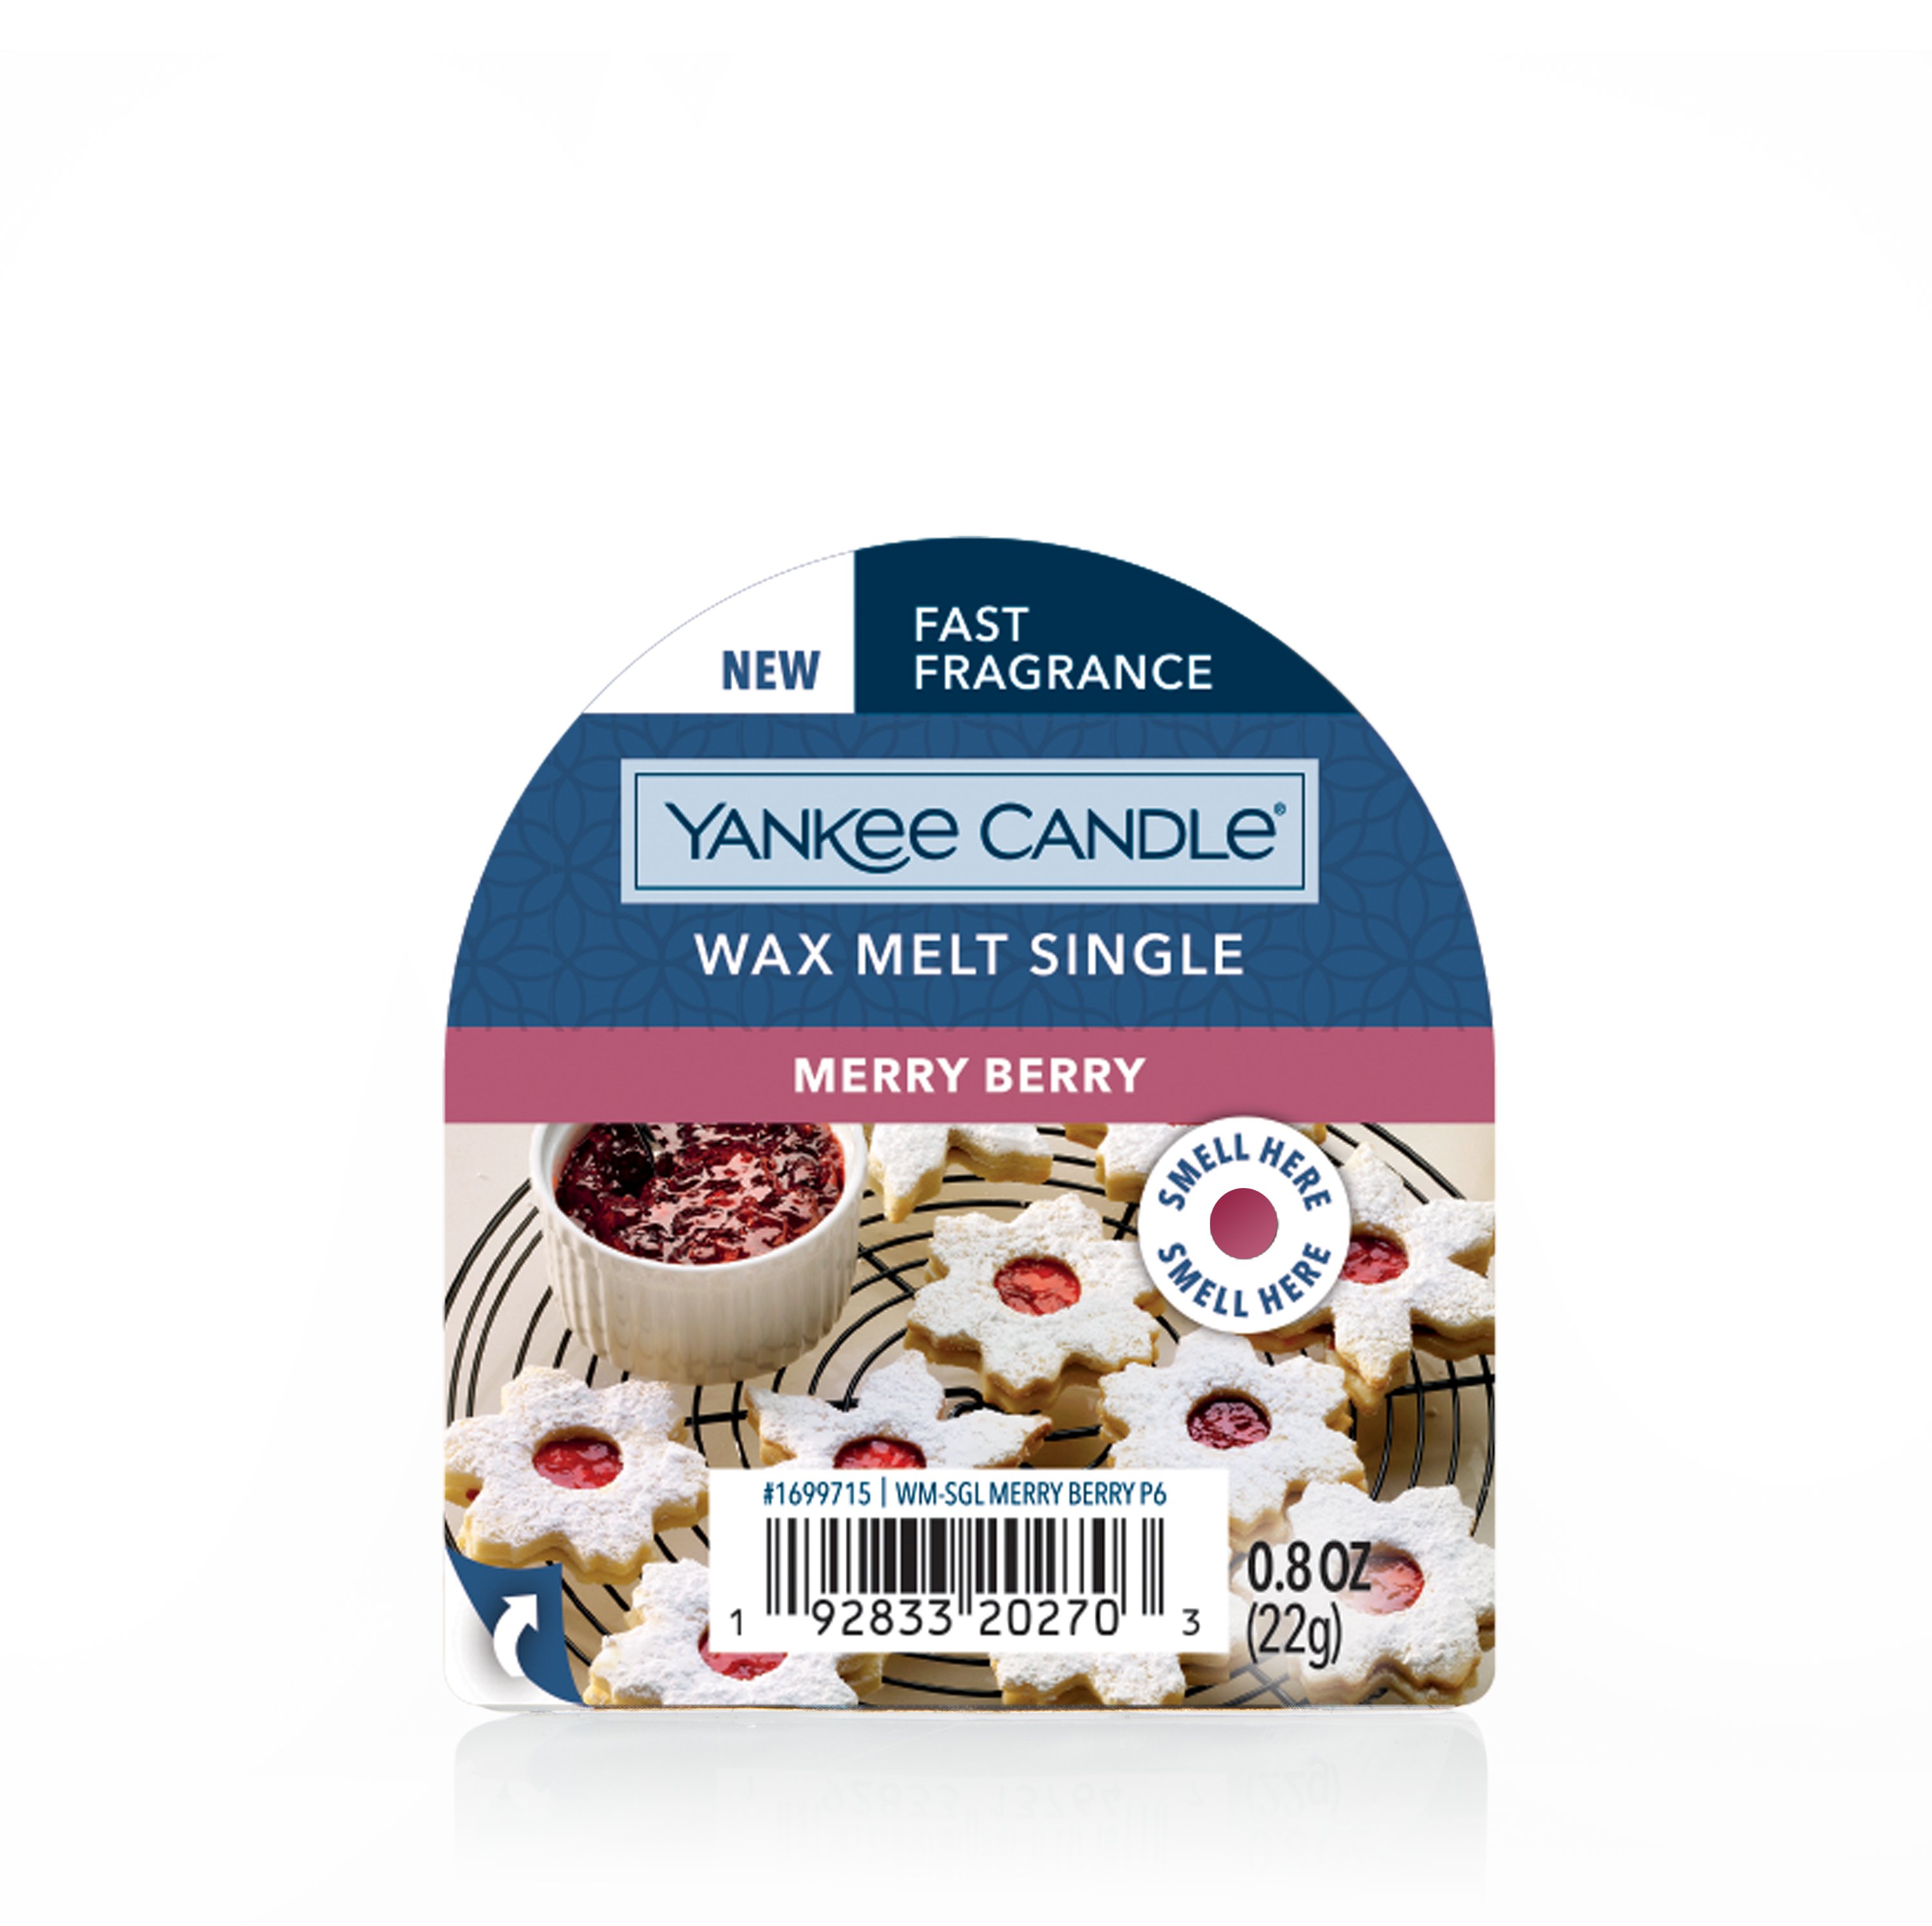 Merry Berry Wax Melt Single - Home Fragrance